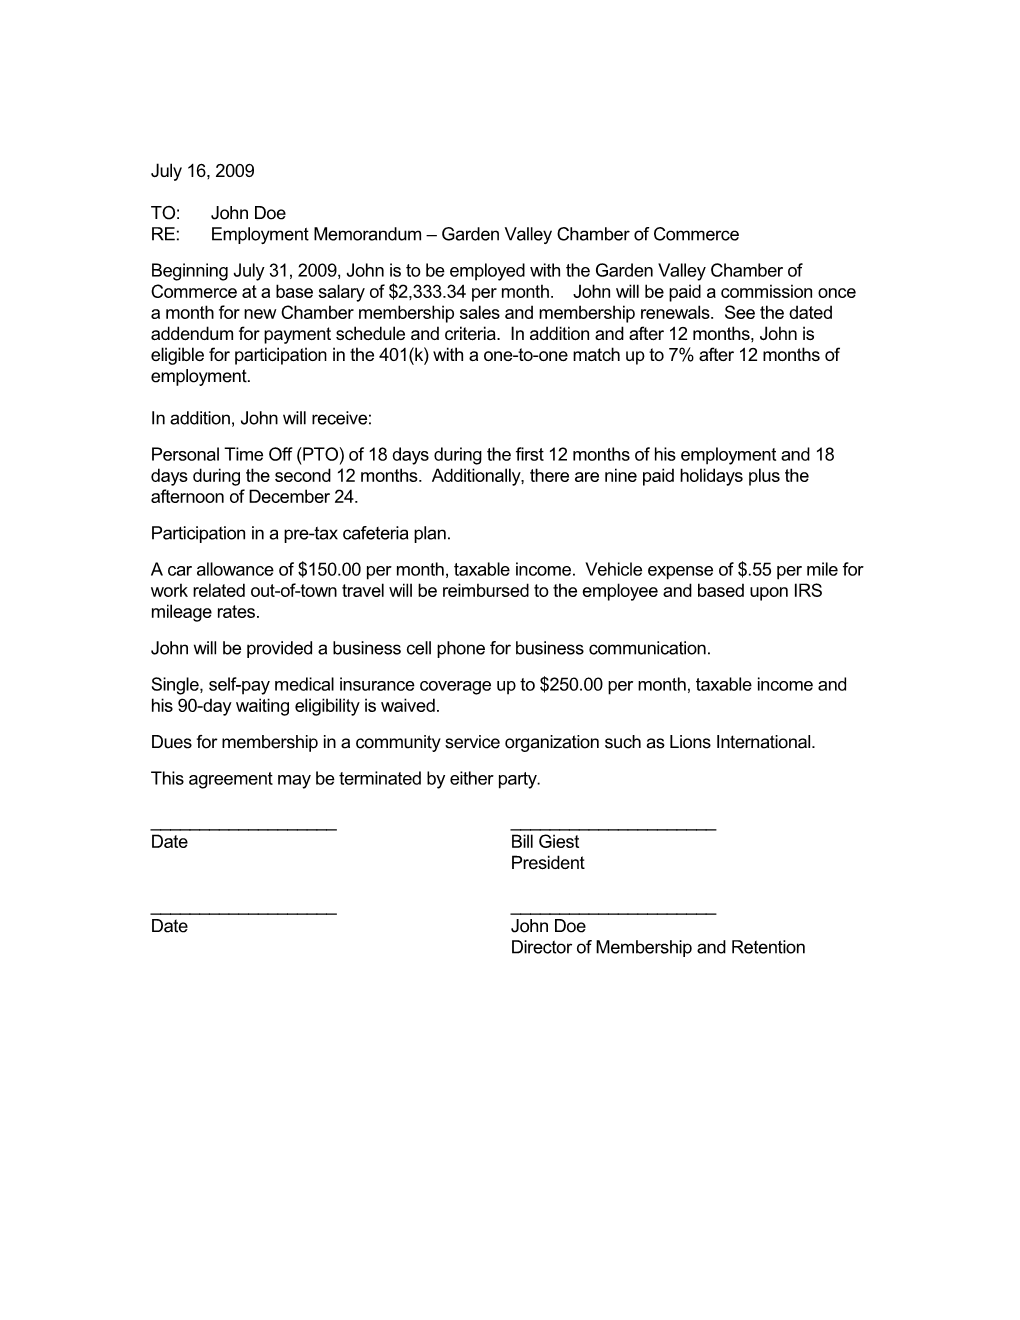 RE:Employment Memorandum Gardenvalley Chamber Ofcommerce